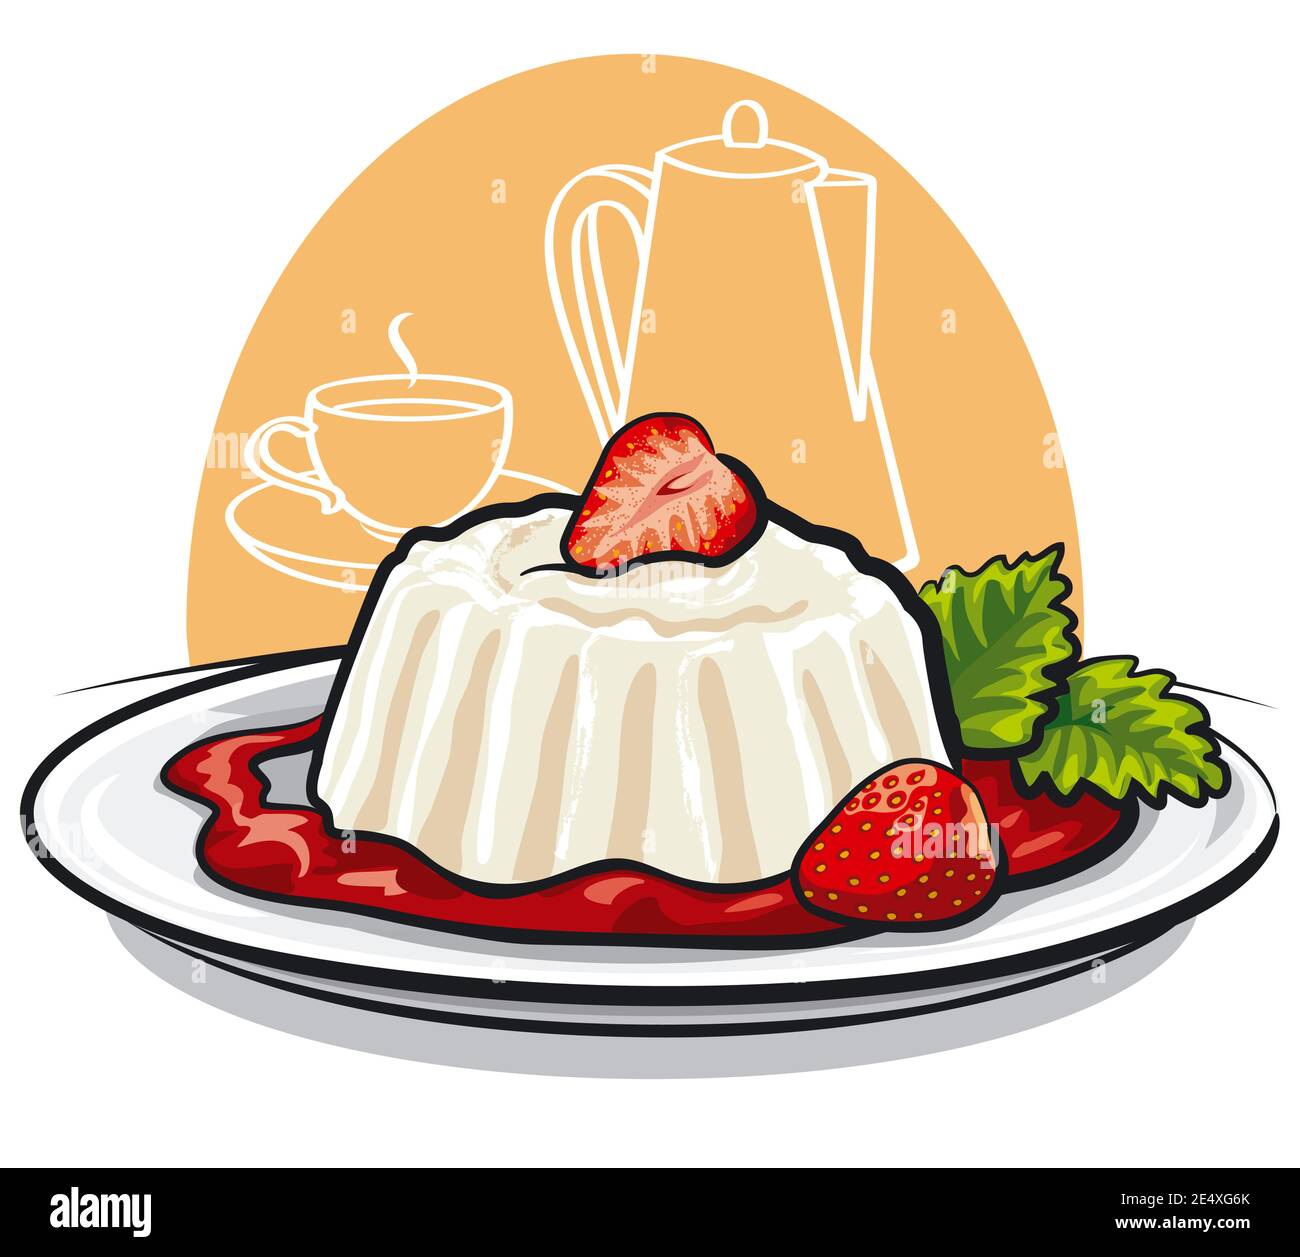 Dessert panna cotta Stock Vector Images - Alamy